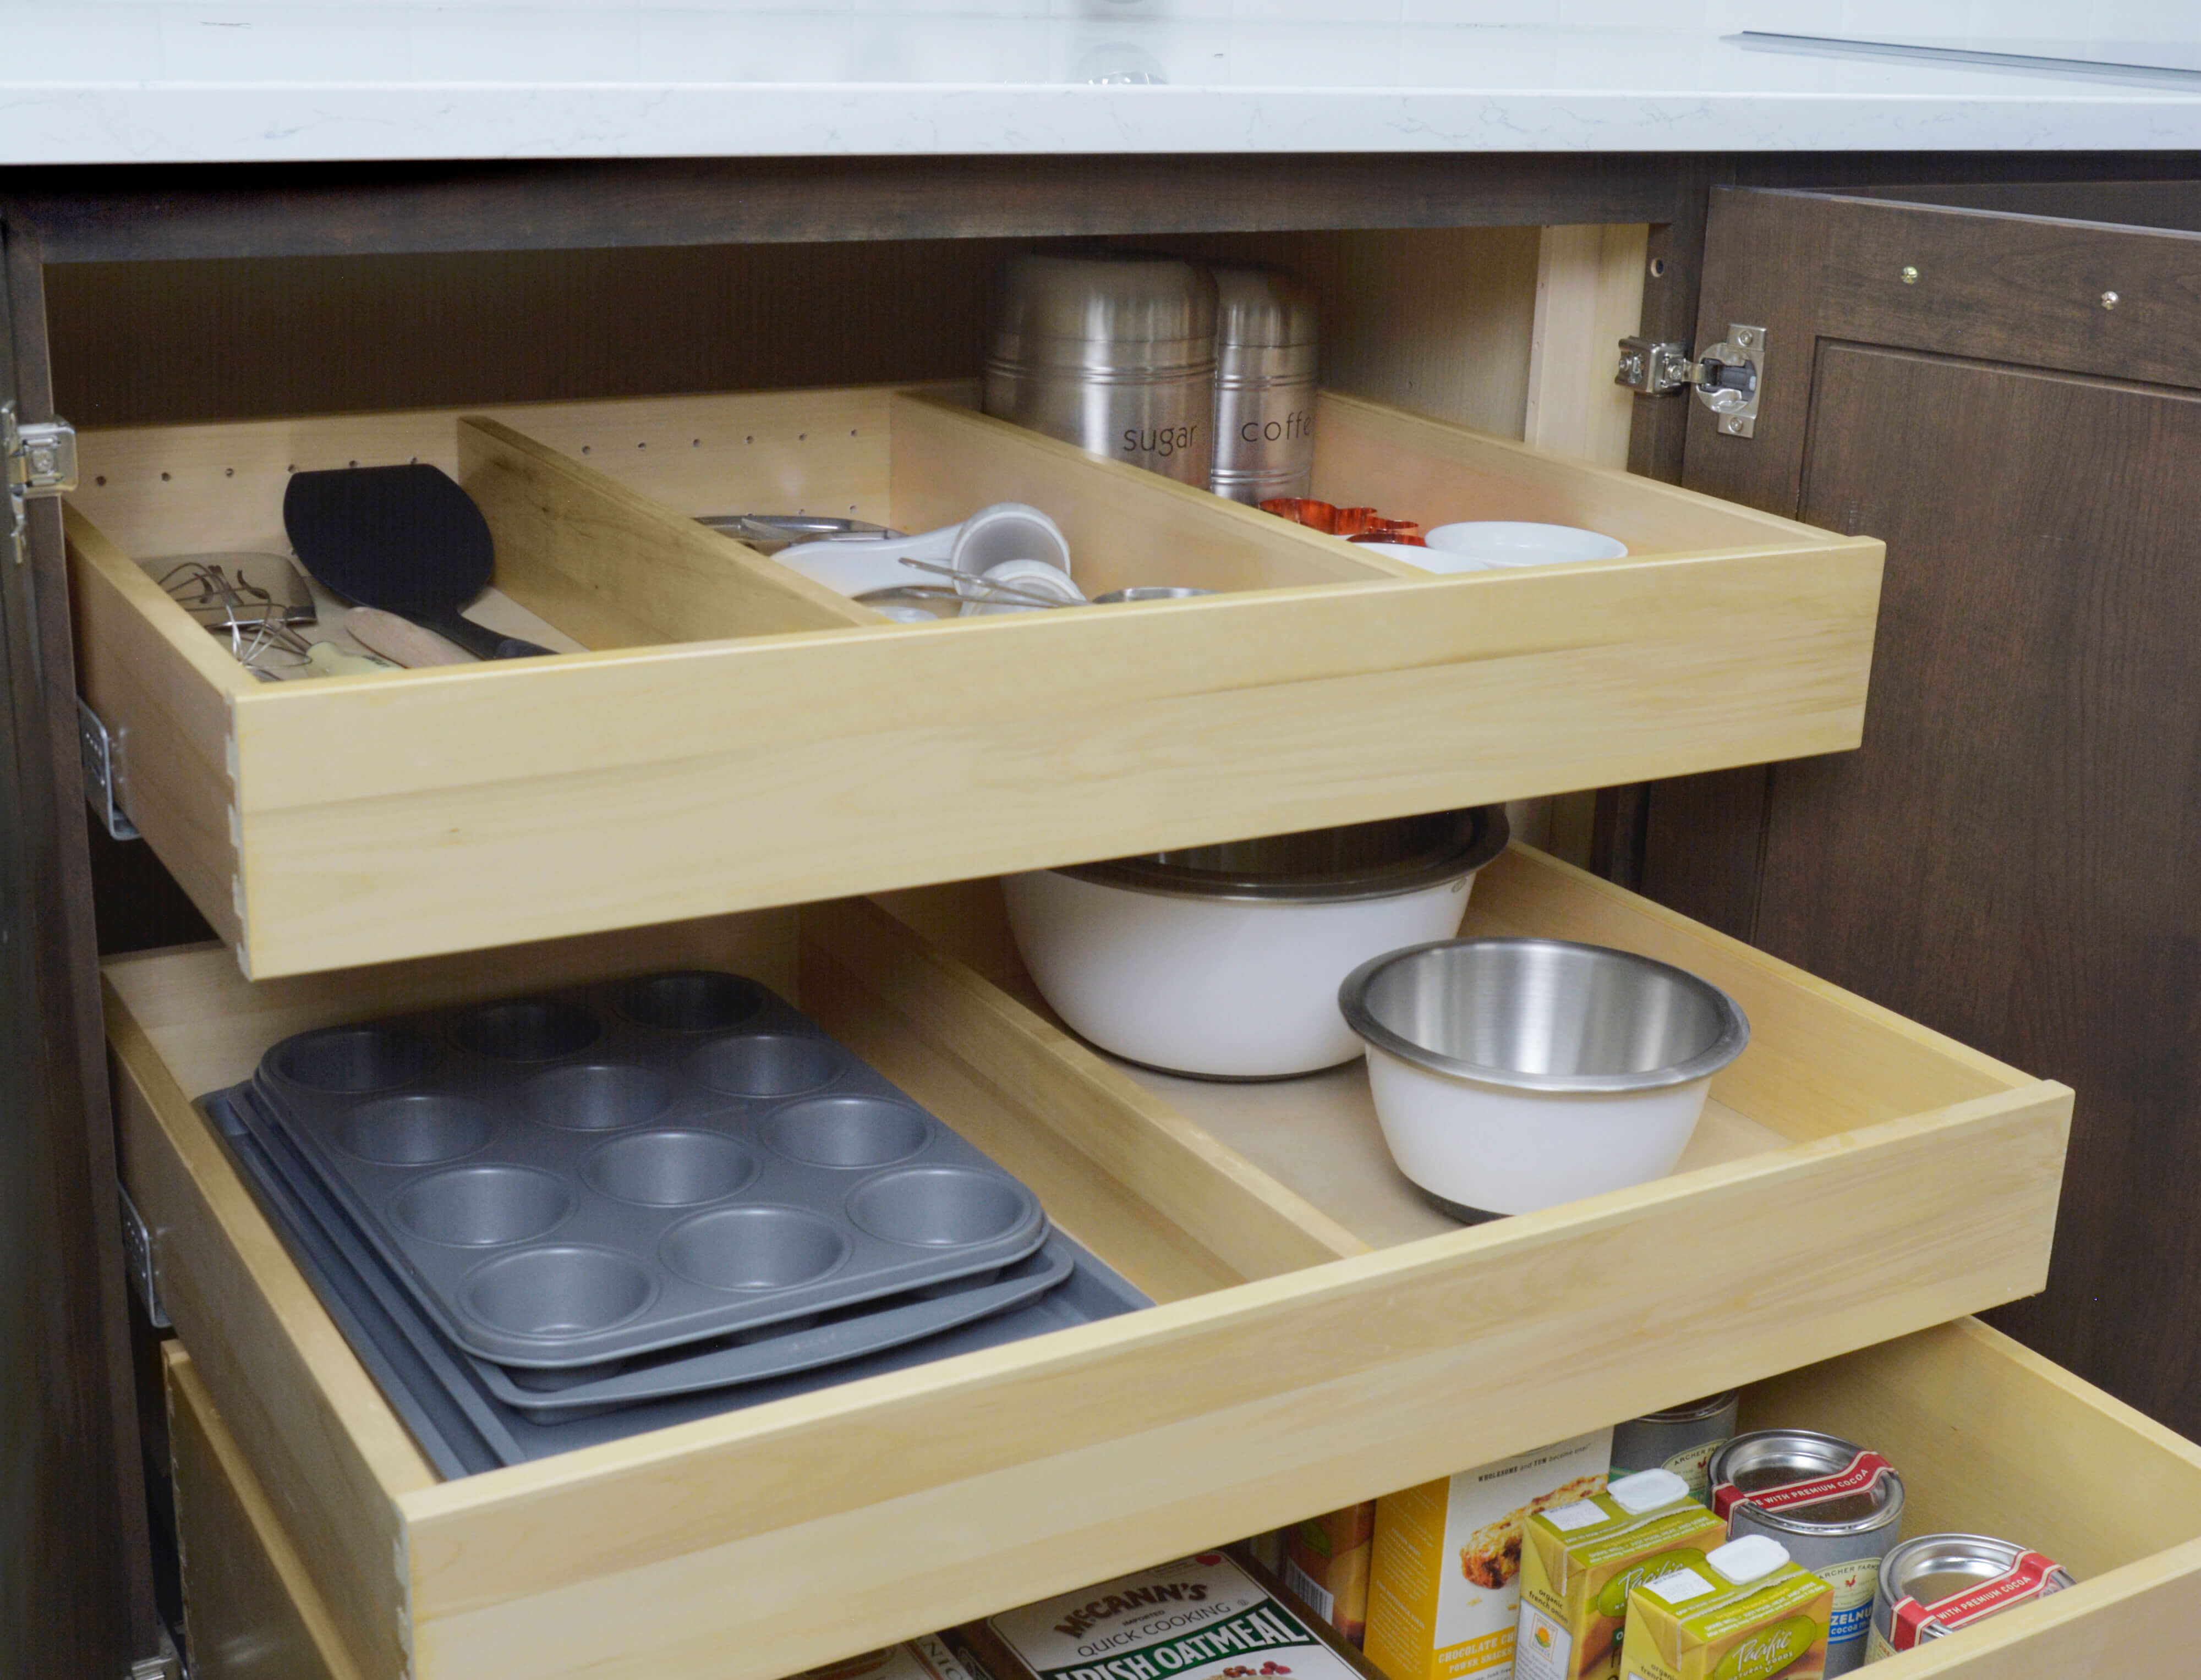 https://www.durasupreme.com/wp-content/uploads/2020/11/Industrial-Kitchen-Display-dividers-roll-out-shelves.jpg